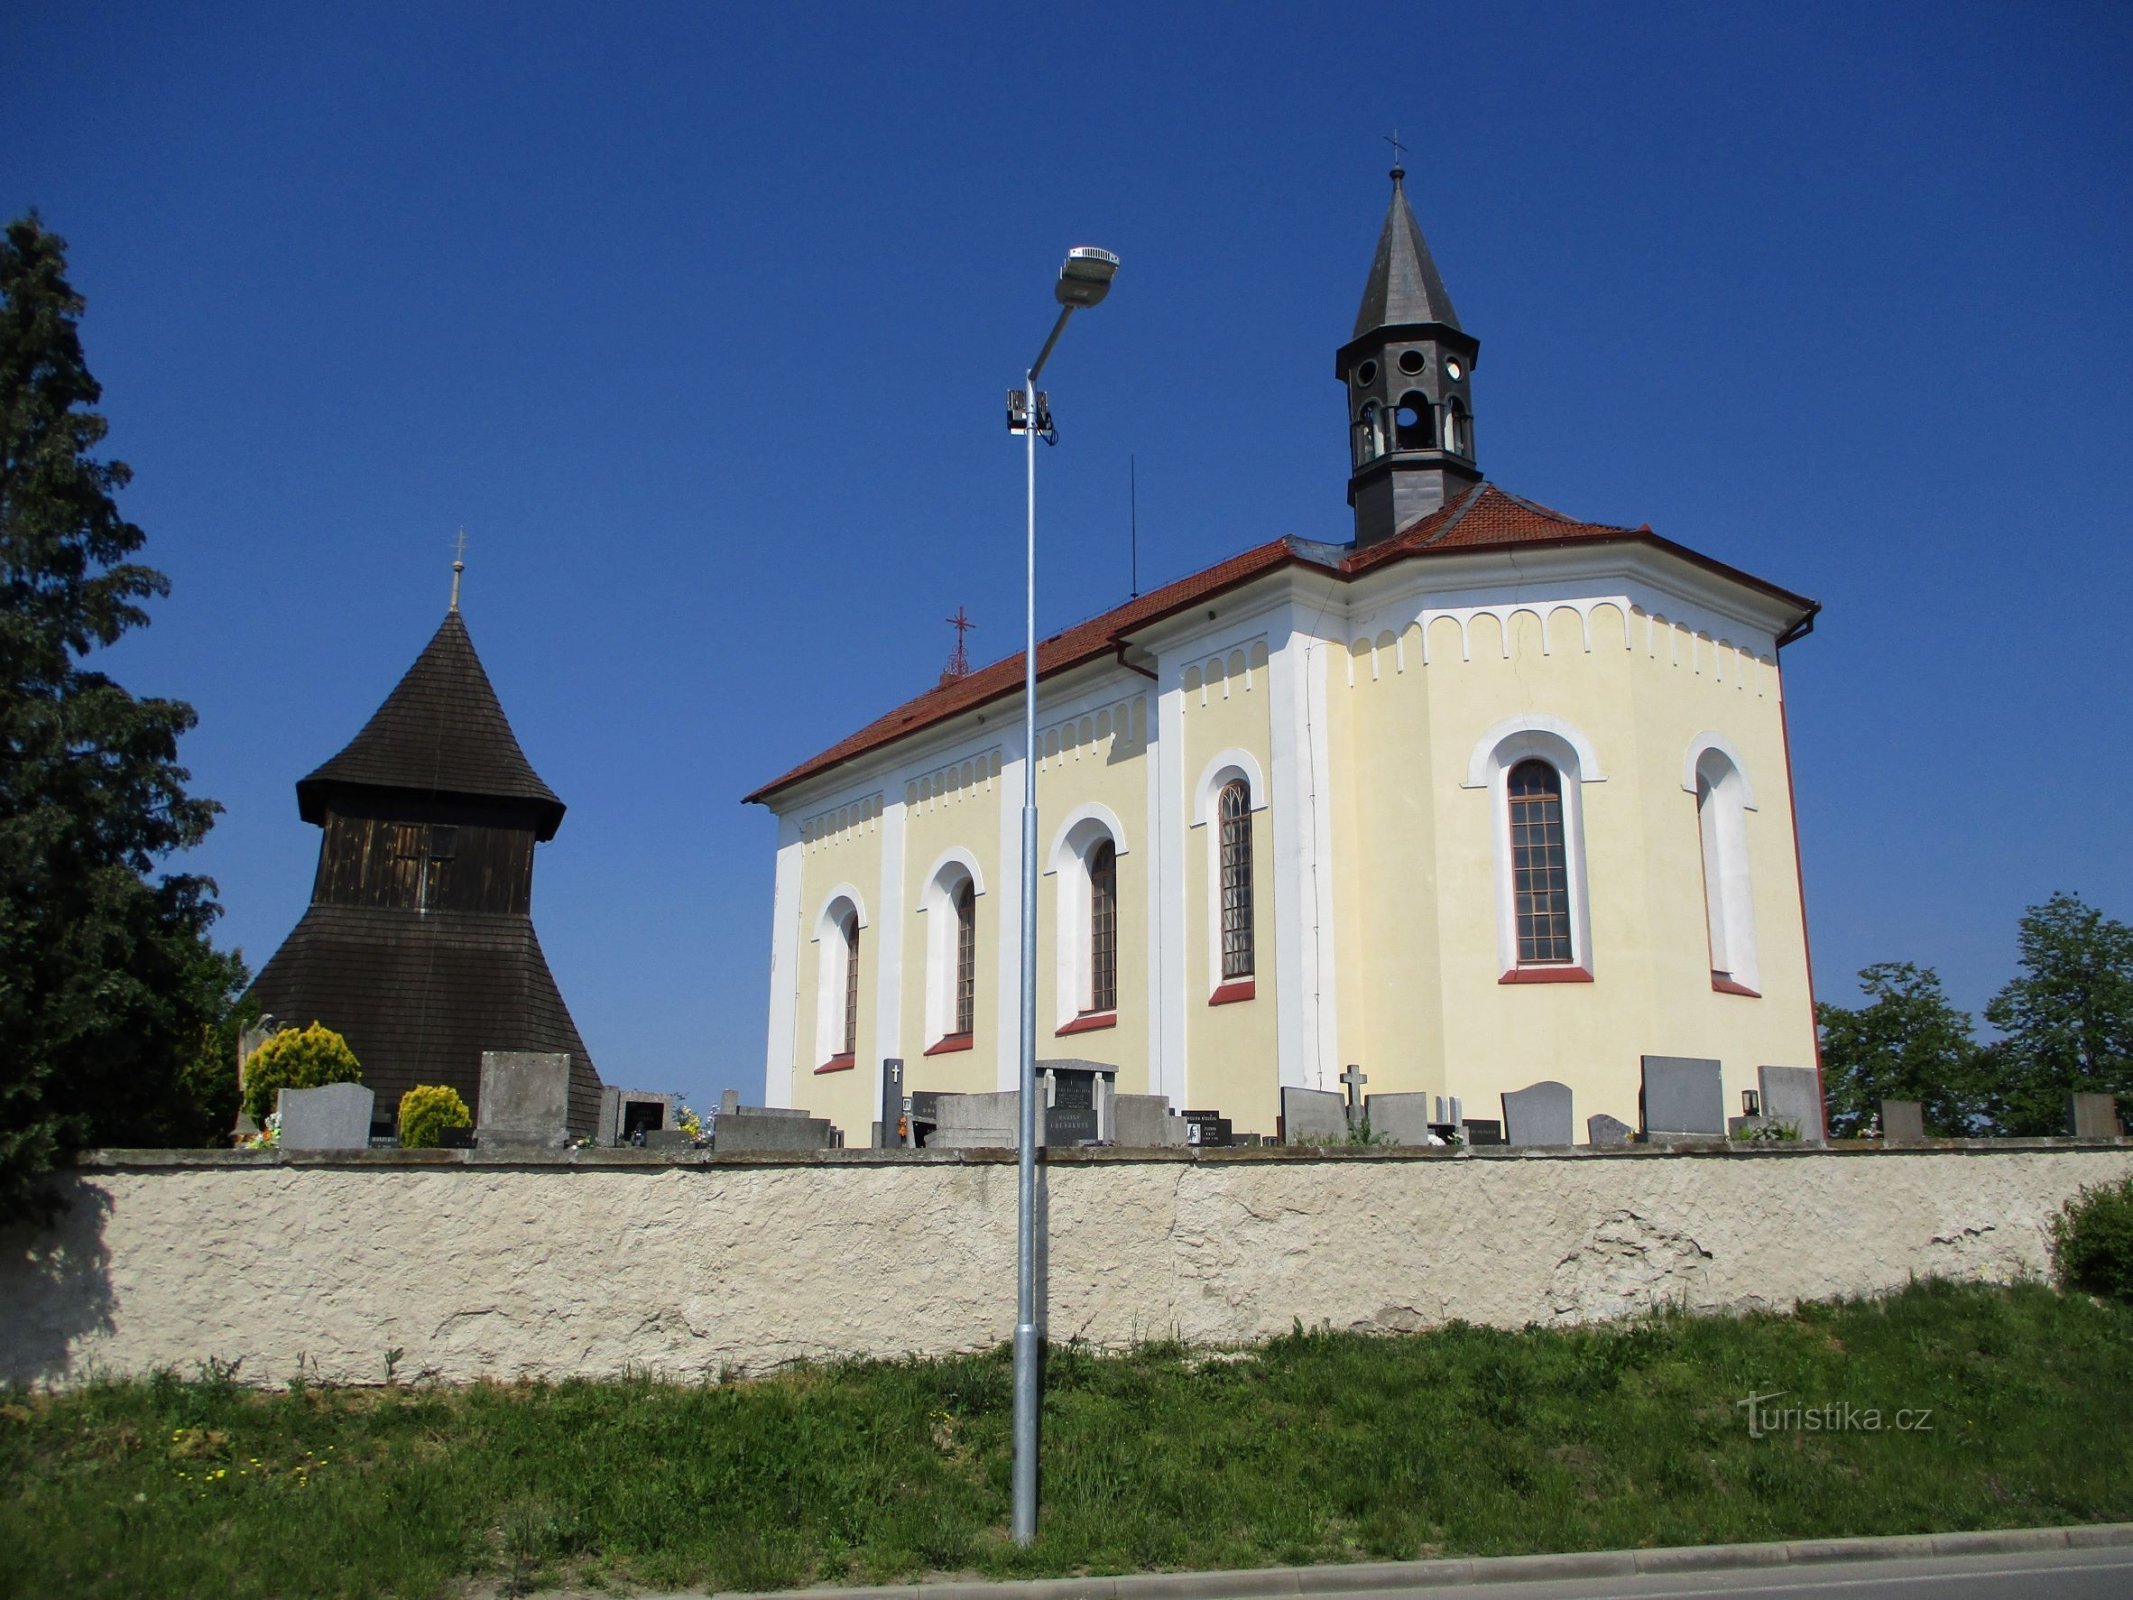 Le clocher et l'église St. Venceslas (Horní Ředice, 16.5.2020/XNUMX/XNUMX)